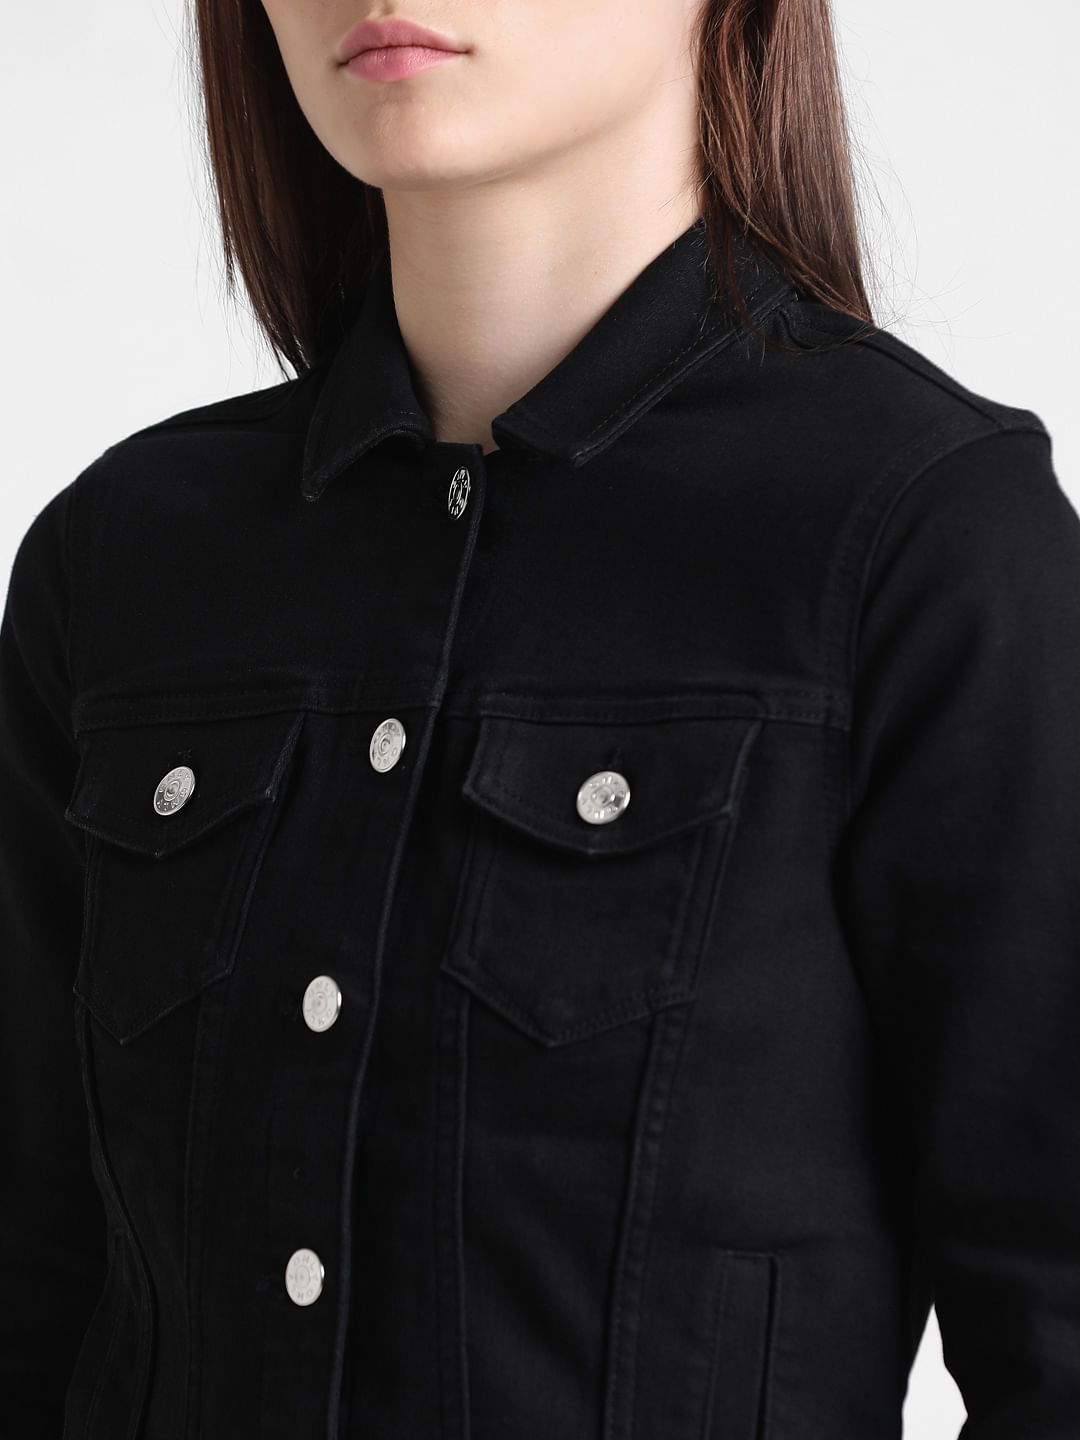 Womens Black Denim Jackets | Black Fitted Denim Jackets | Next